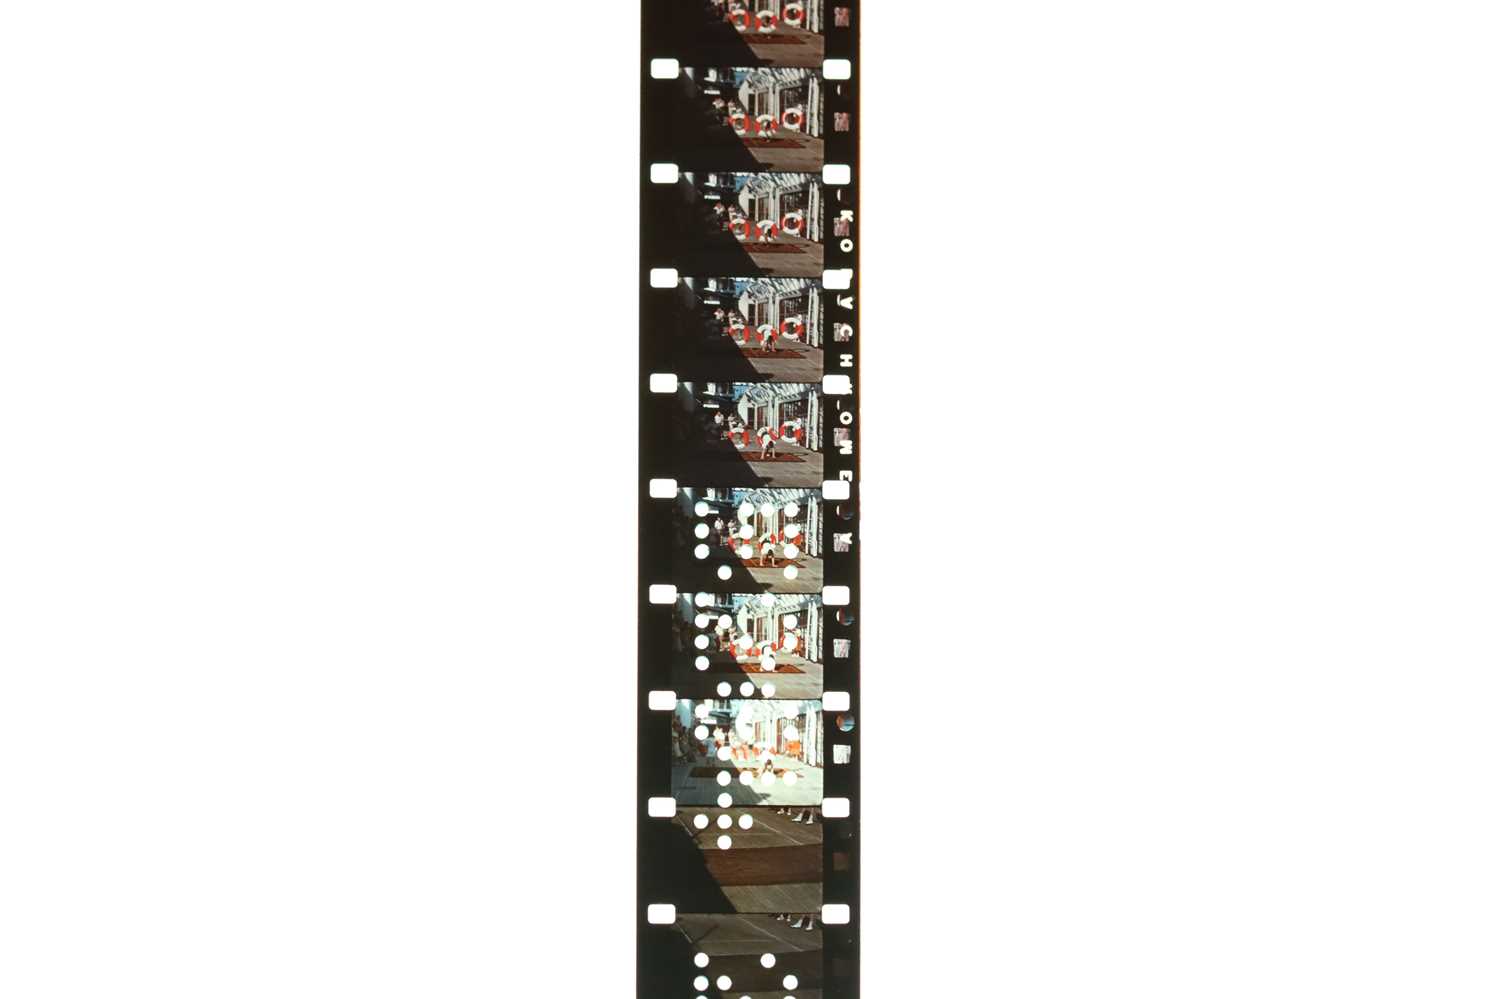 Lot 210 - Shipping Interest - 16mm Cine Film Reel